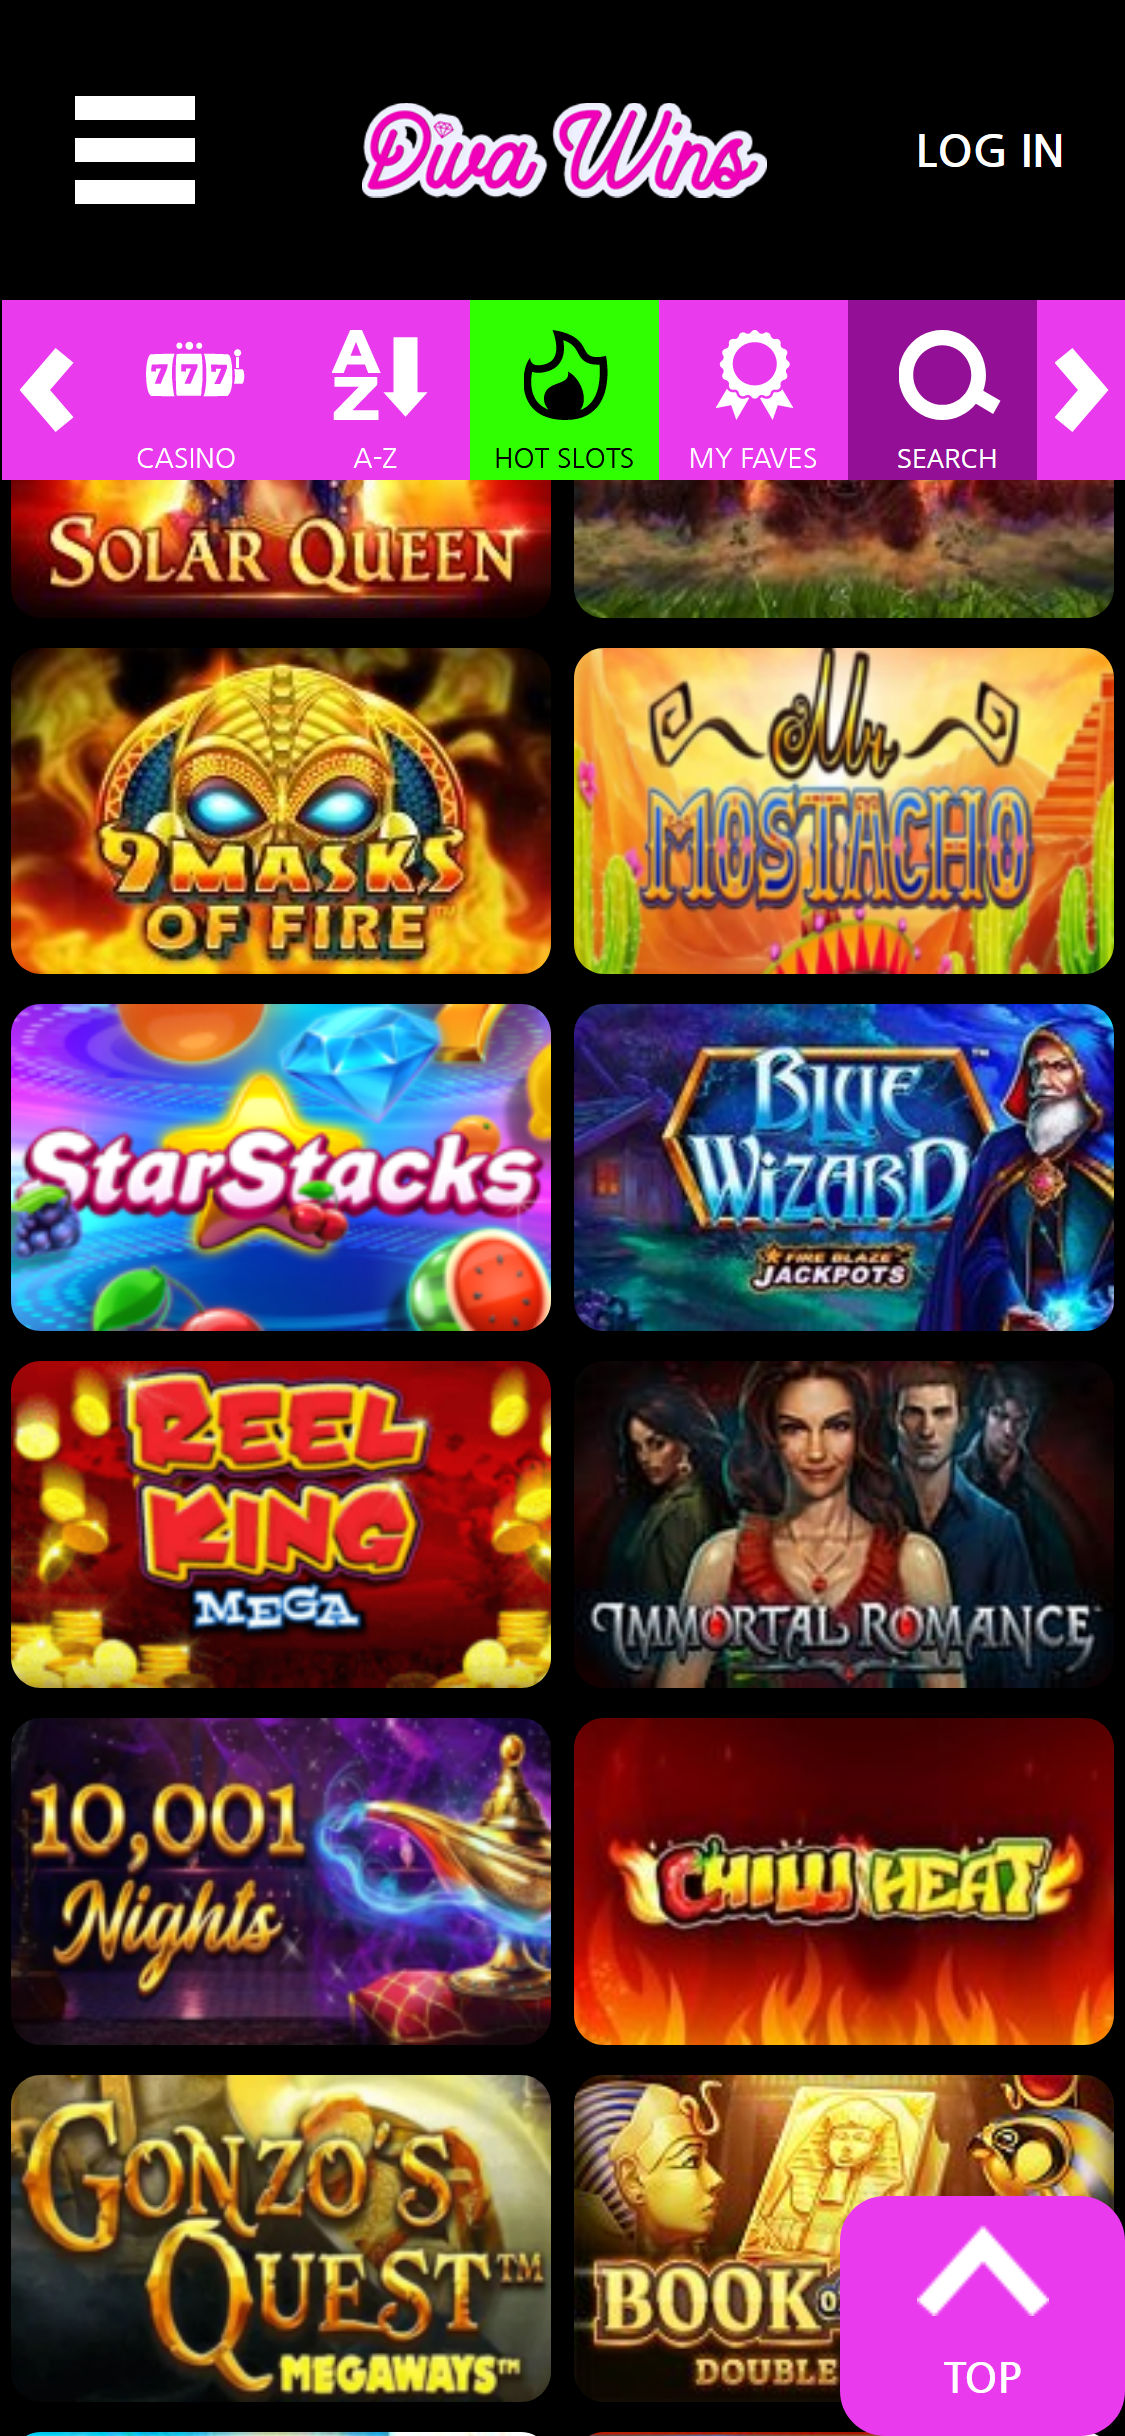 Diva Wins Casino Mobile Games Review